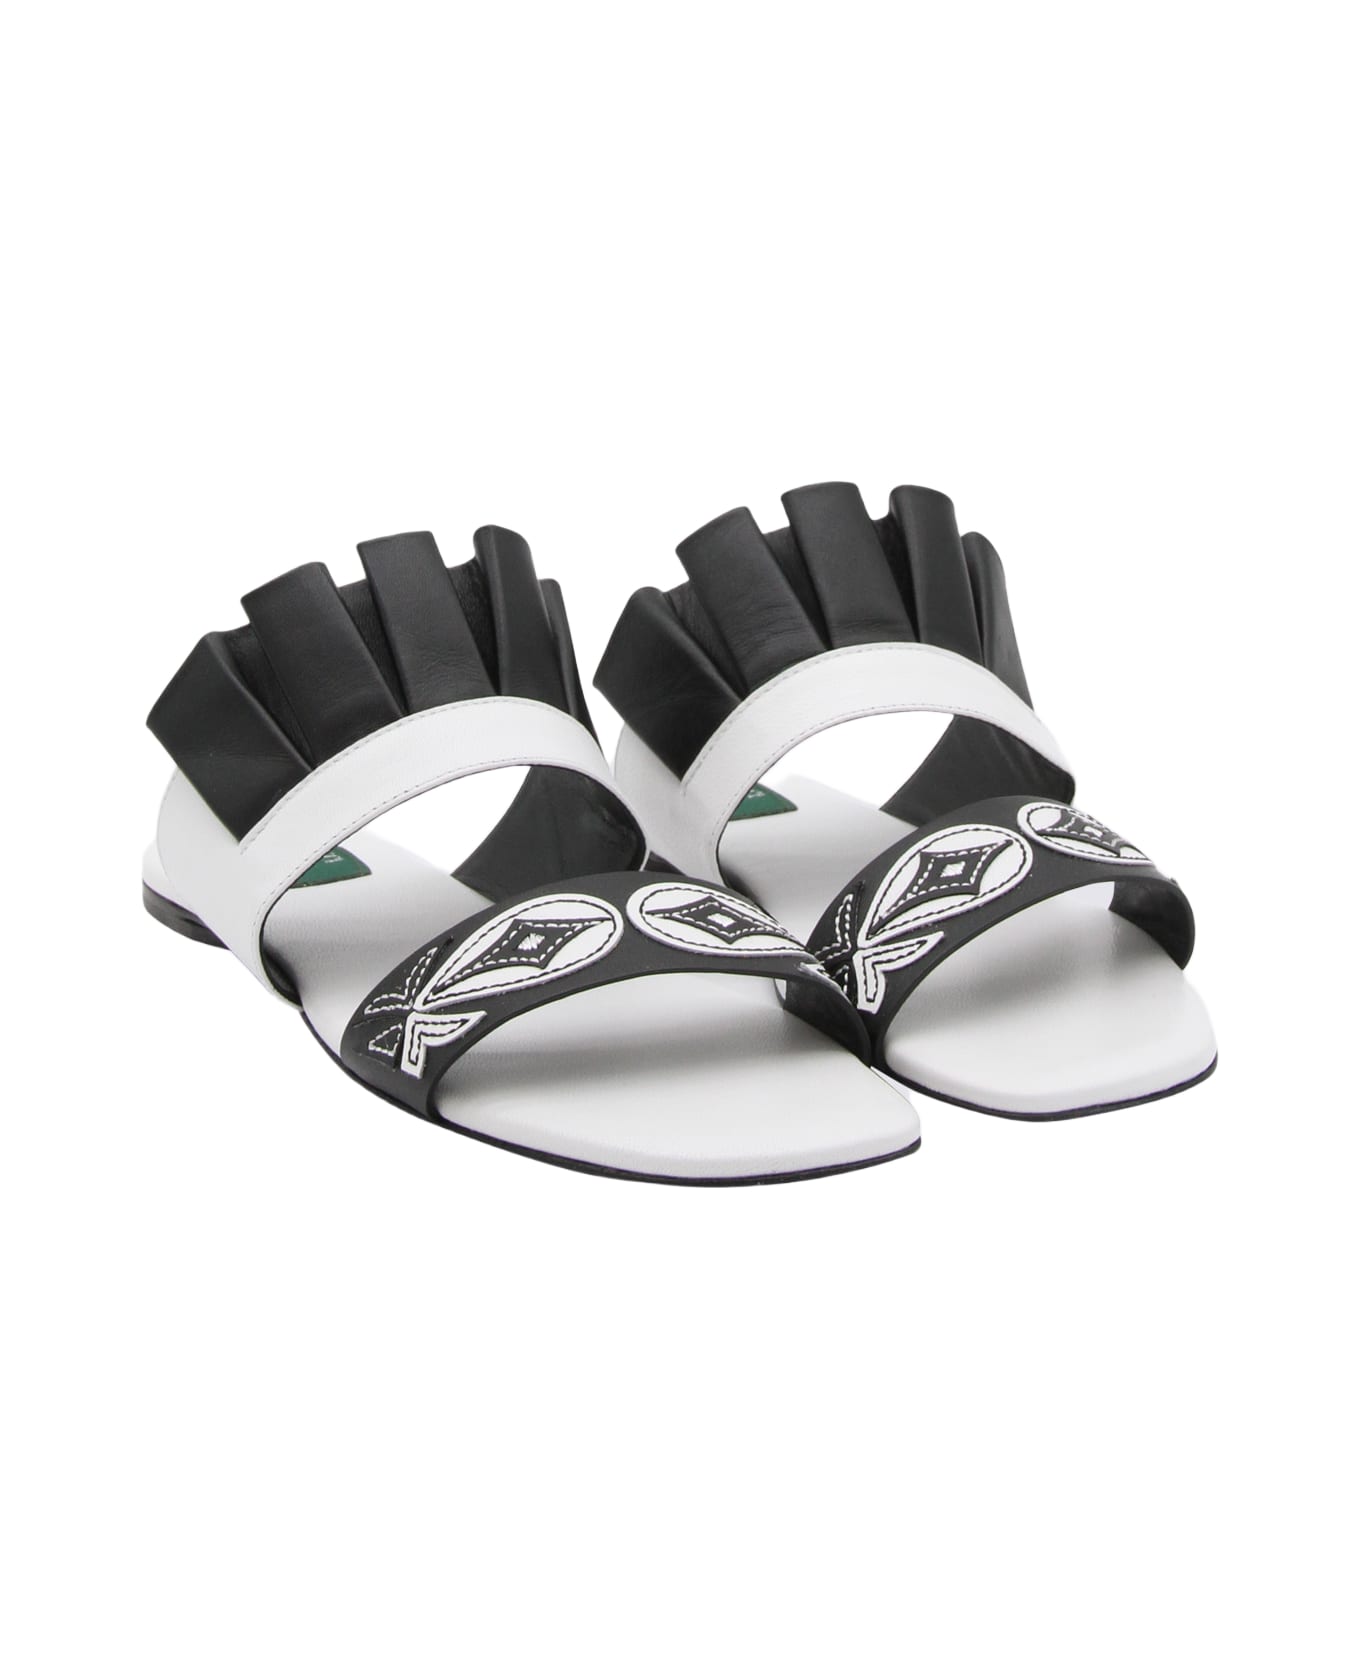 Pucci Black And White Leather Goccia Applique' Sandals Sandals - White